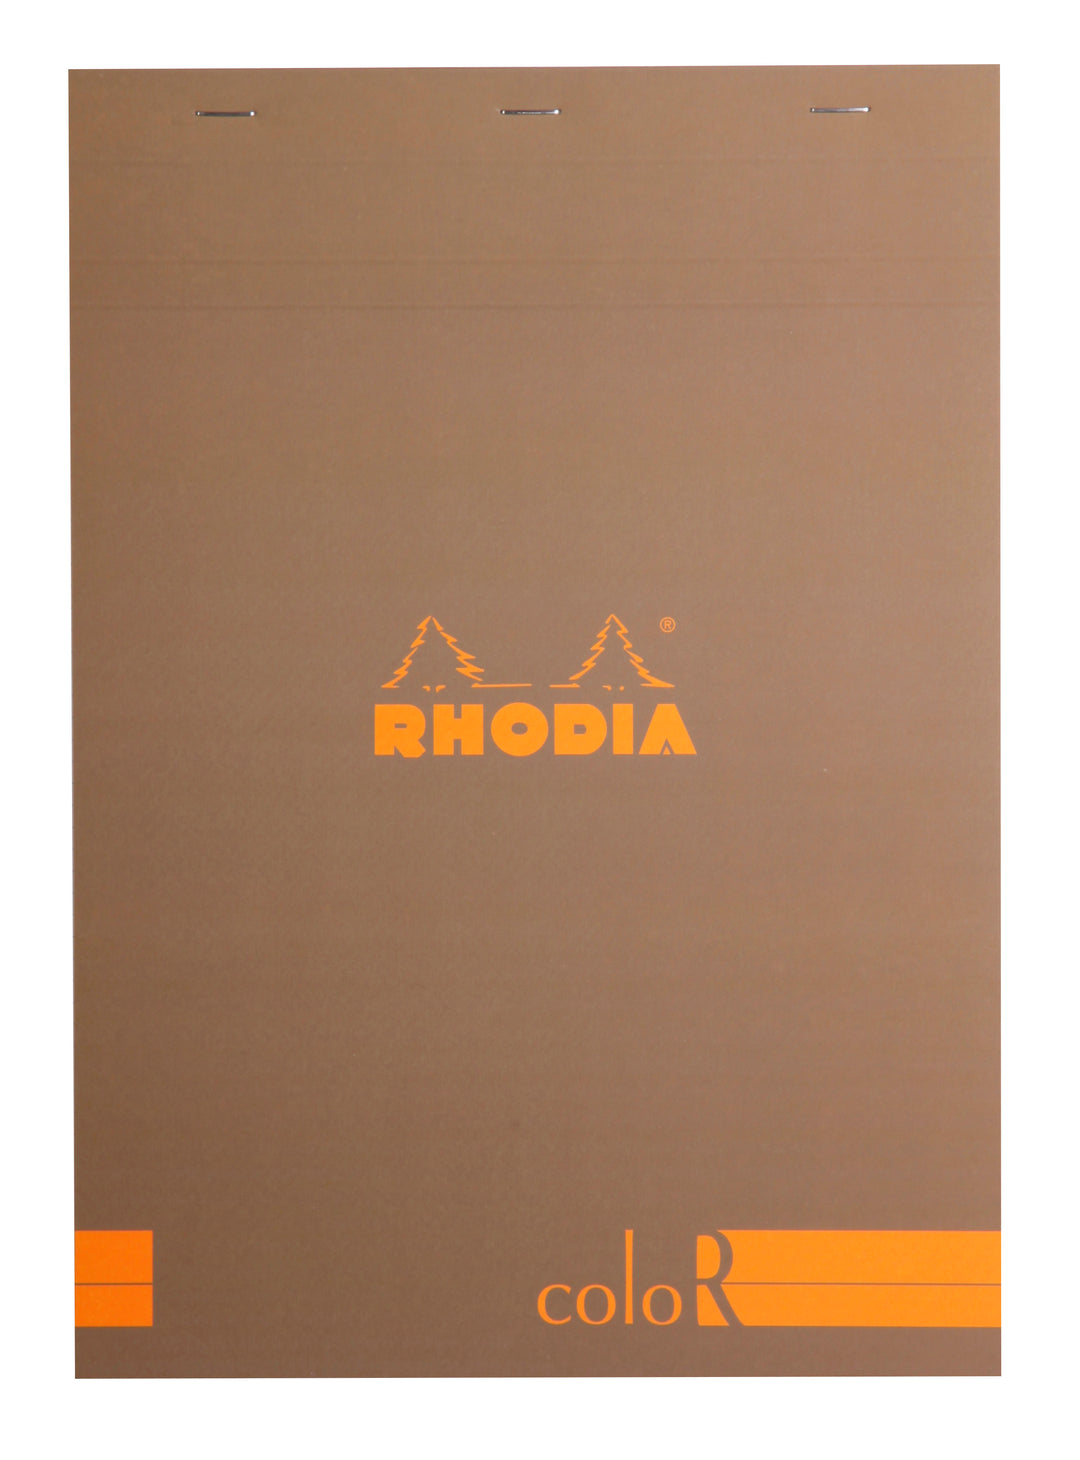 Rhodia Basics coloR Stapled Line Ruled Notepad - A5